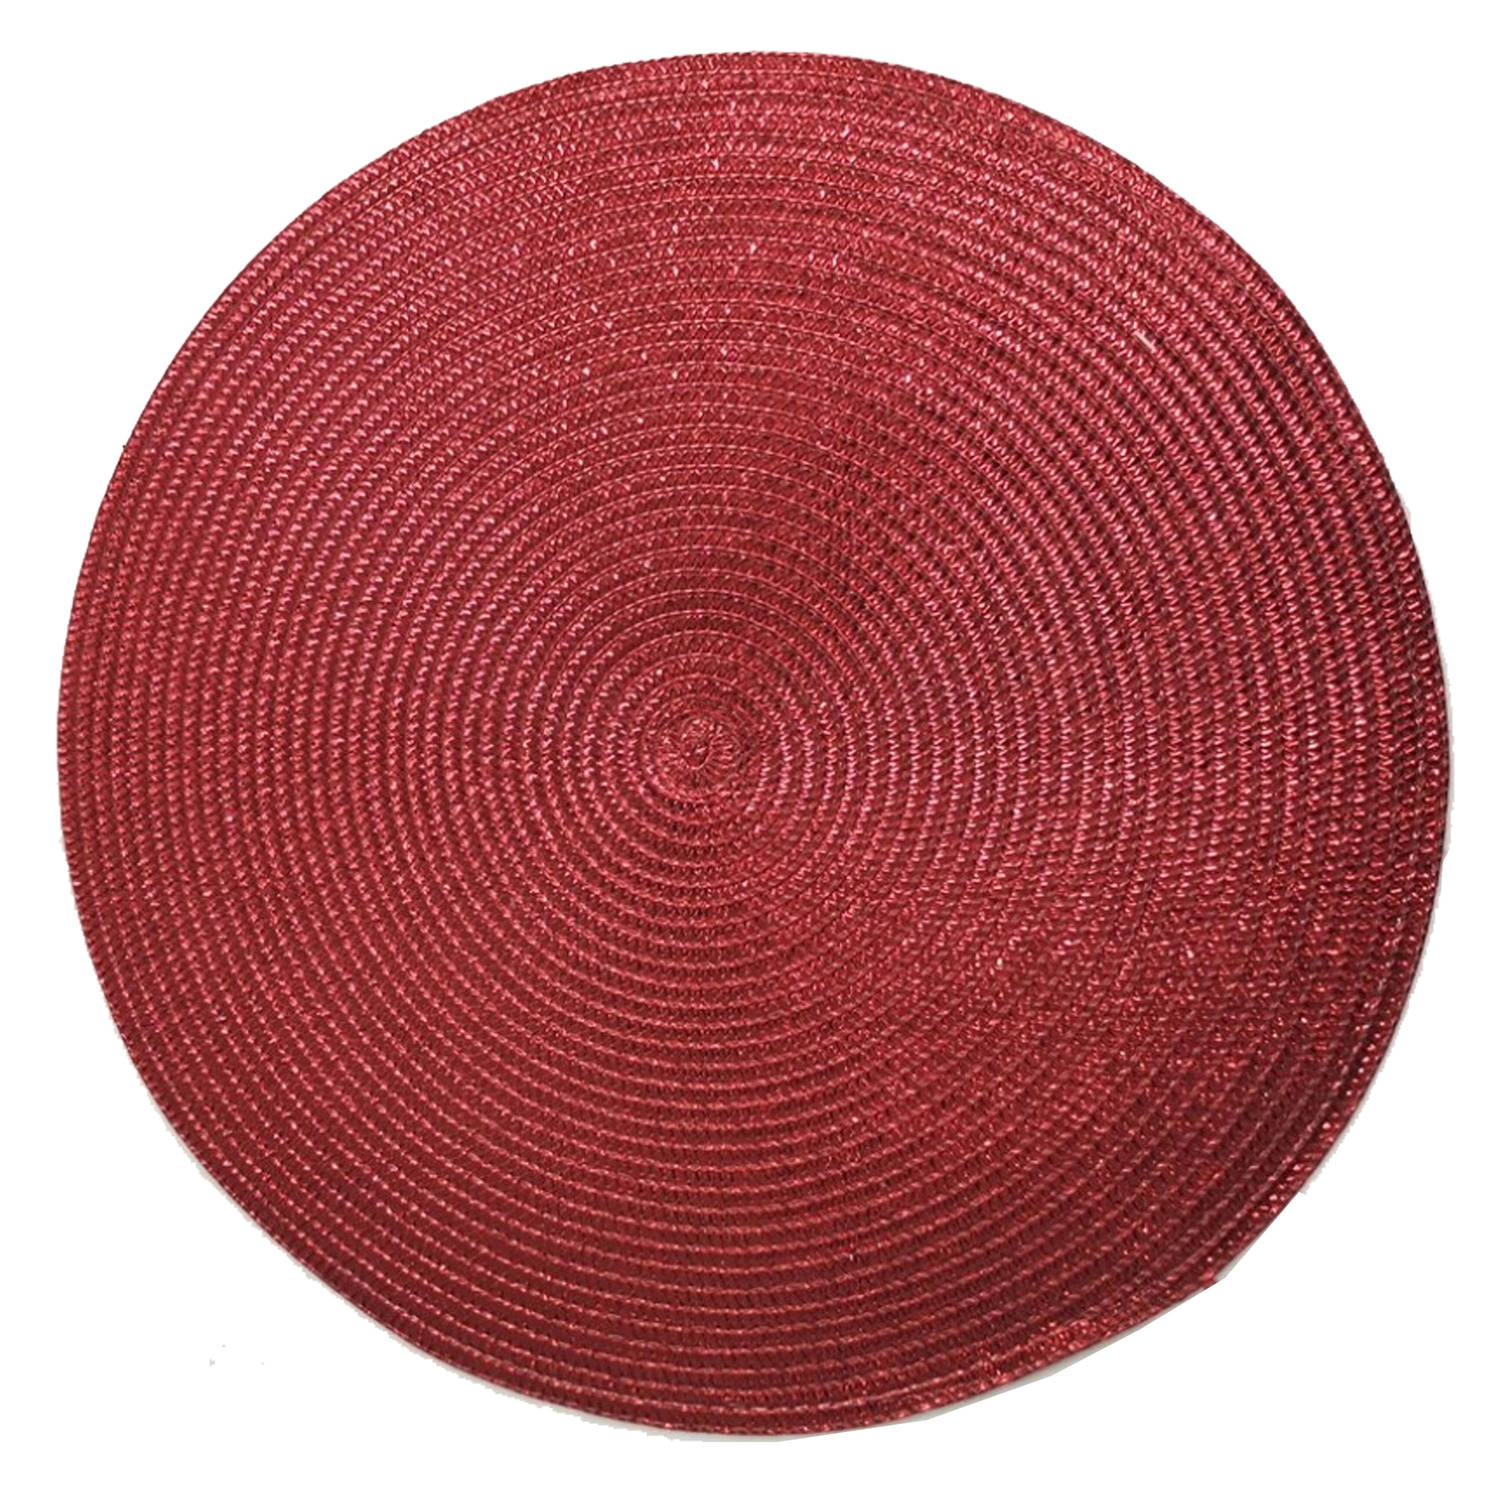 Ronde Placemats metallic kerst rood look diameter 38 cm - Geverfd jute - Voor o.a. Kerstmis